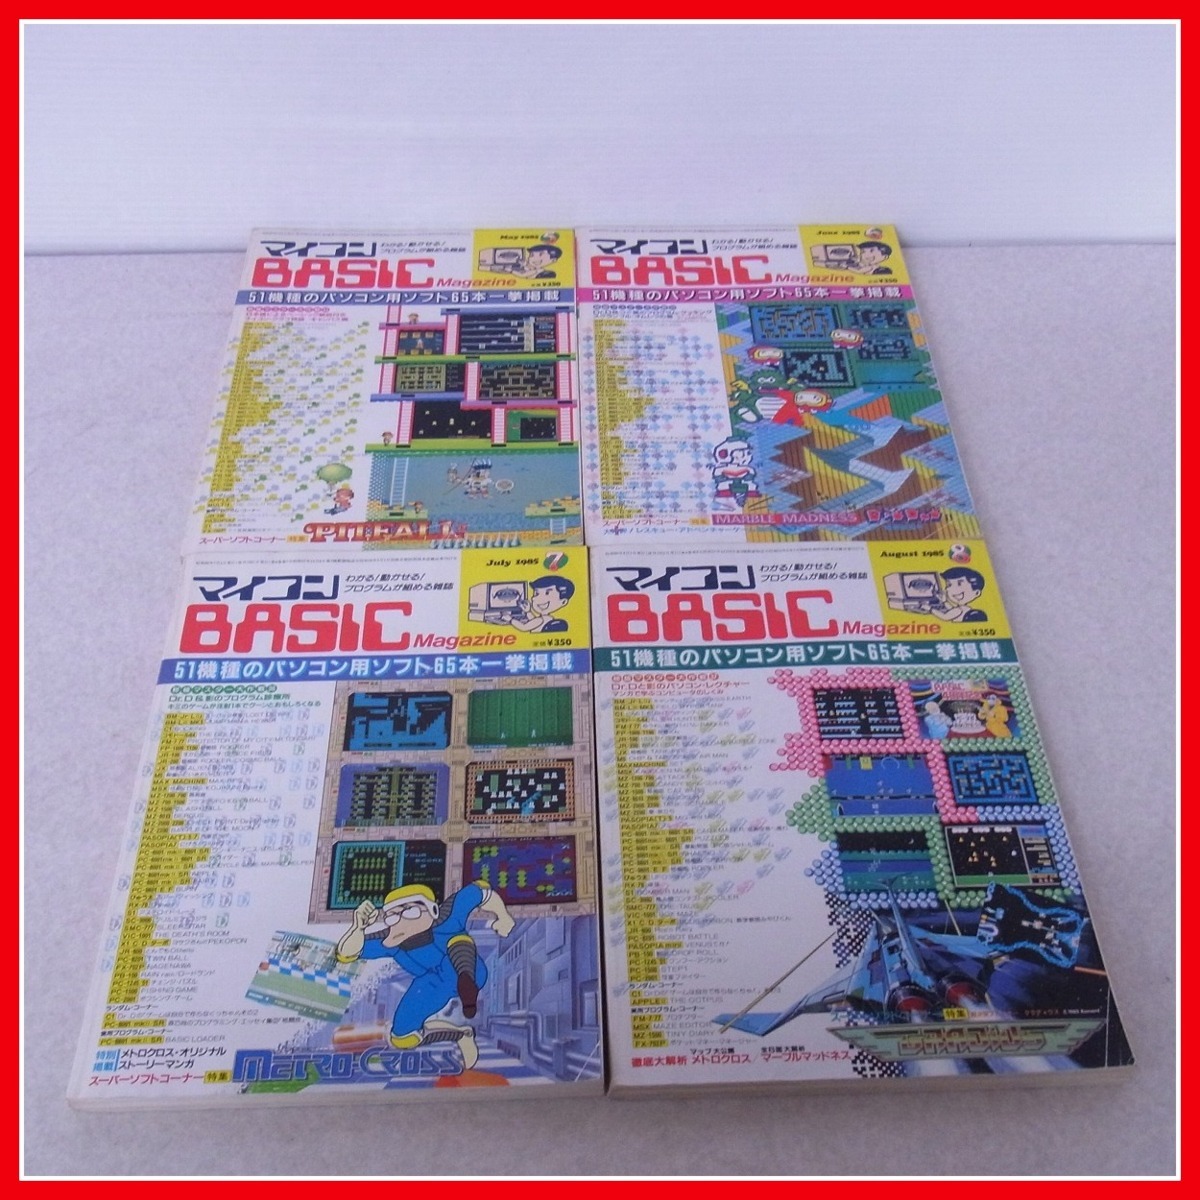 * журнал microcomputer BASIC Magazine Basic журнал Showa 60 год 1985 год 1 месяц ~12 месяц через год все .. совместно 12 шт. комплект беж maga радиоволны газета фирма [20